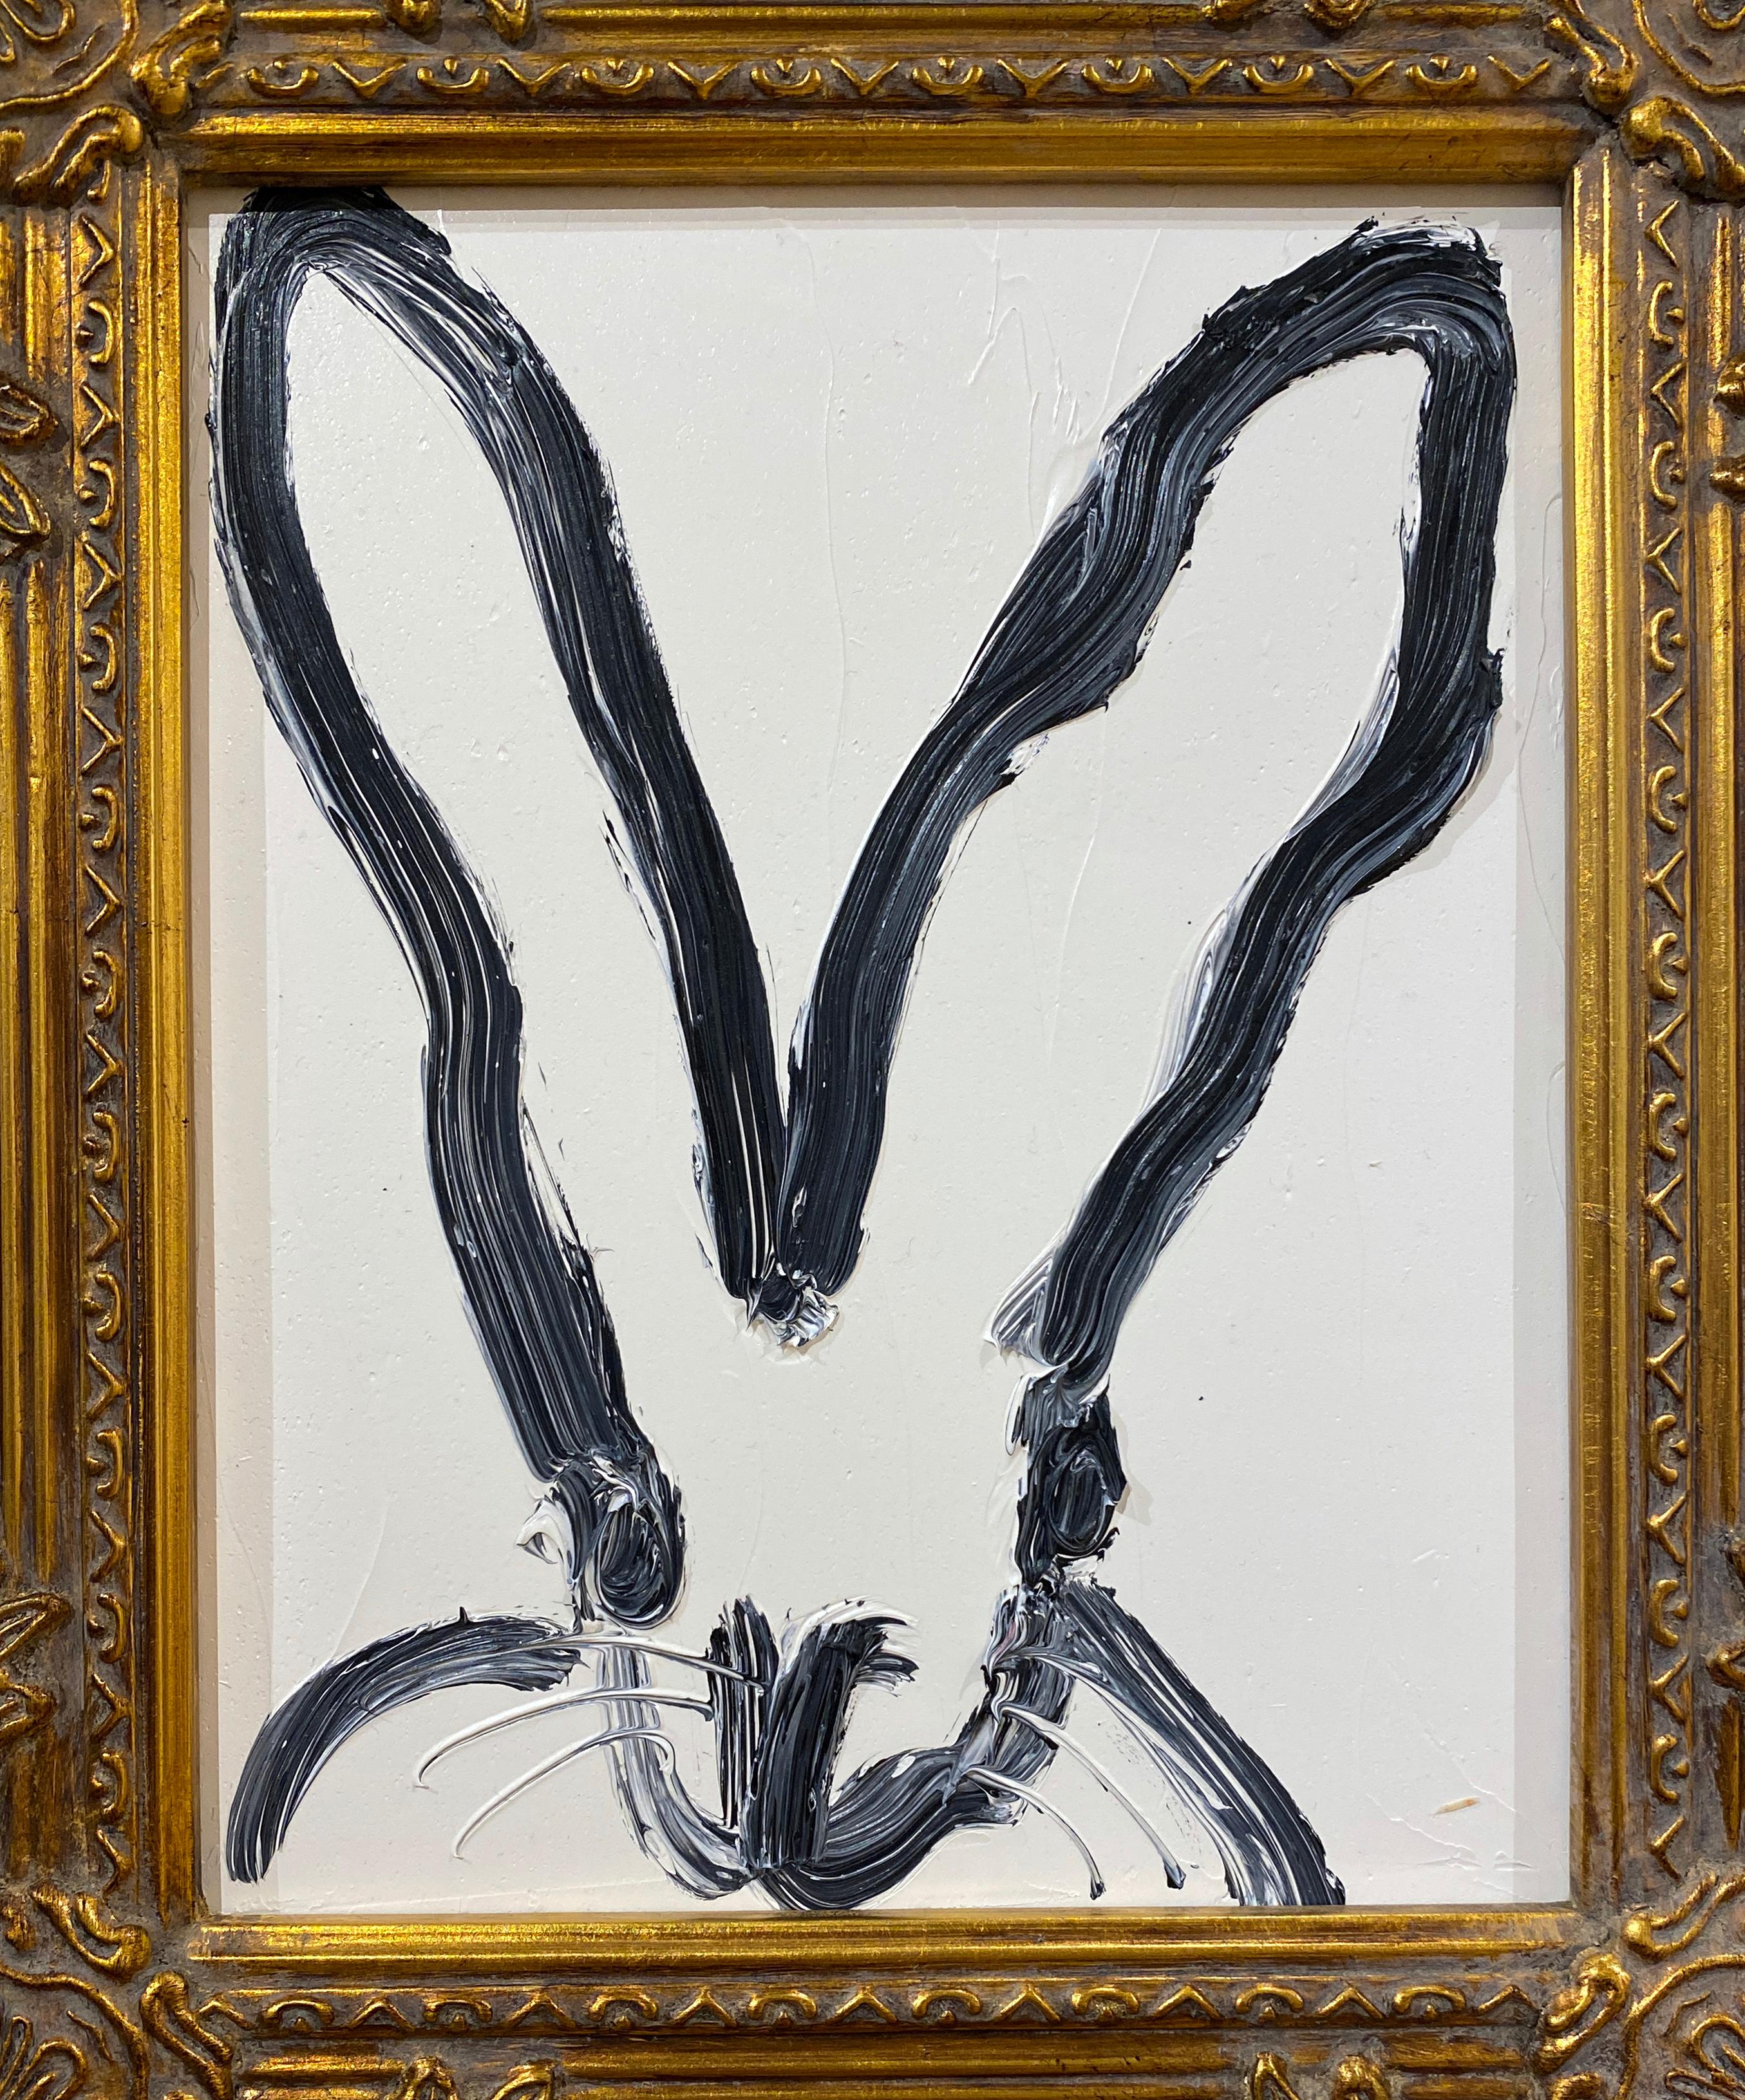 Artist:  Slonem, Hunt
Title:  Maximillian
Series:  Bunnies
Date:  2021
Medium:  Oil on panel
Unframed Dimensions:  10